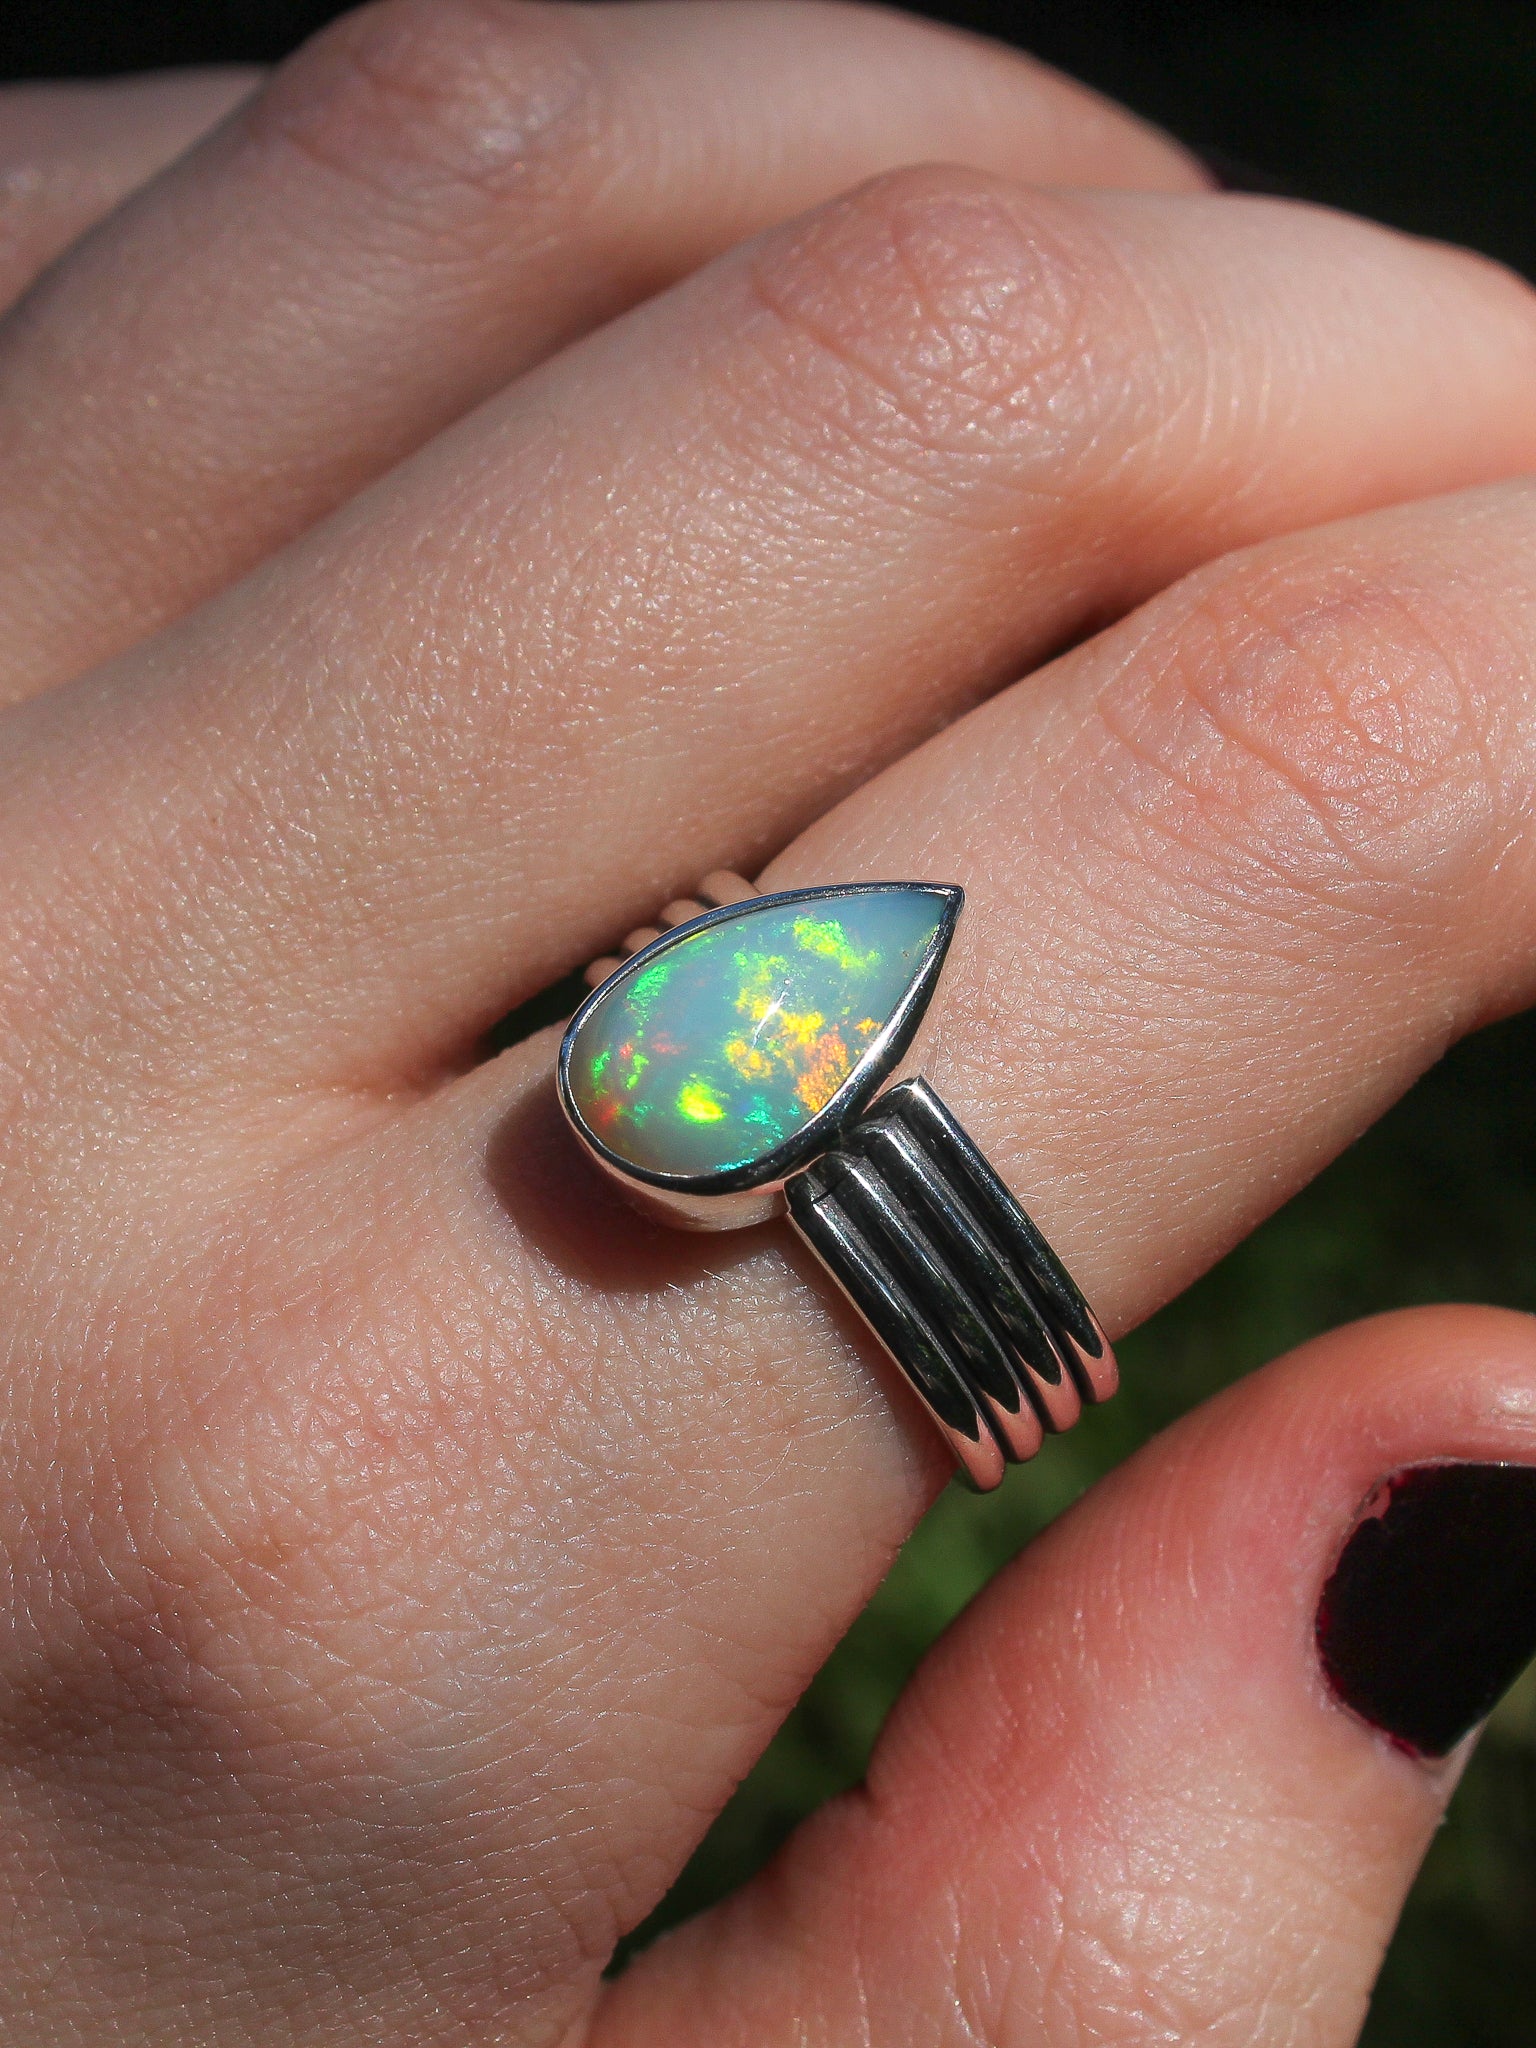 Ethiopian Opal Ring - Size 9.5